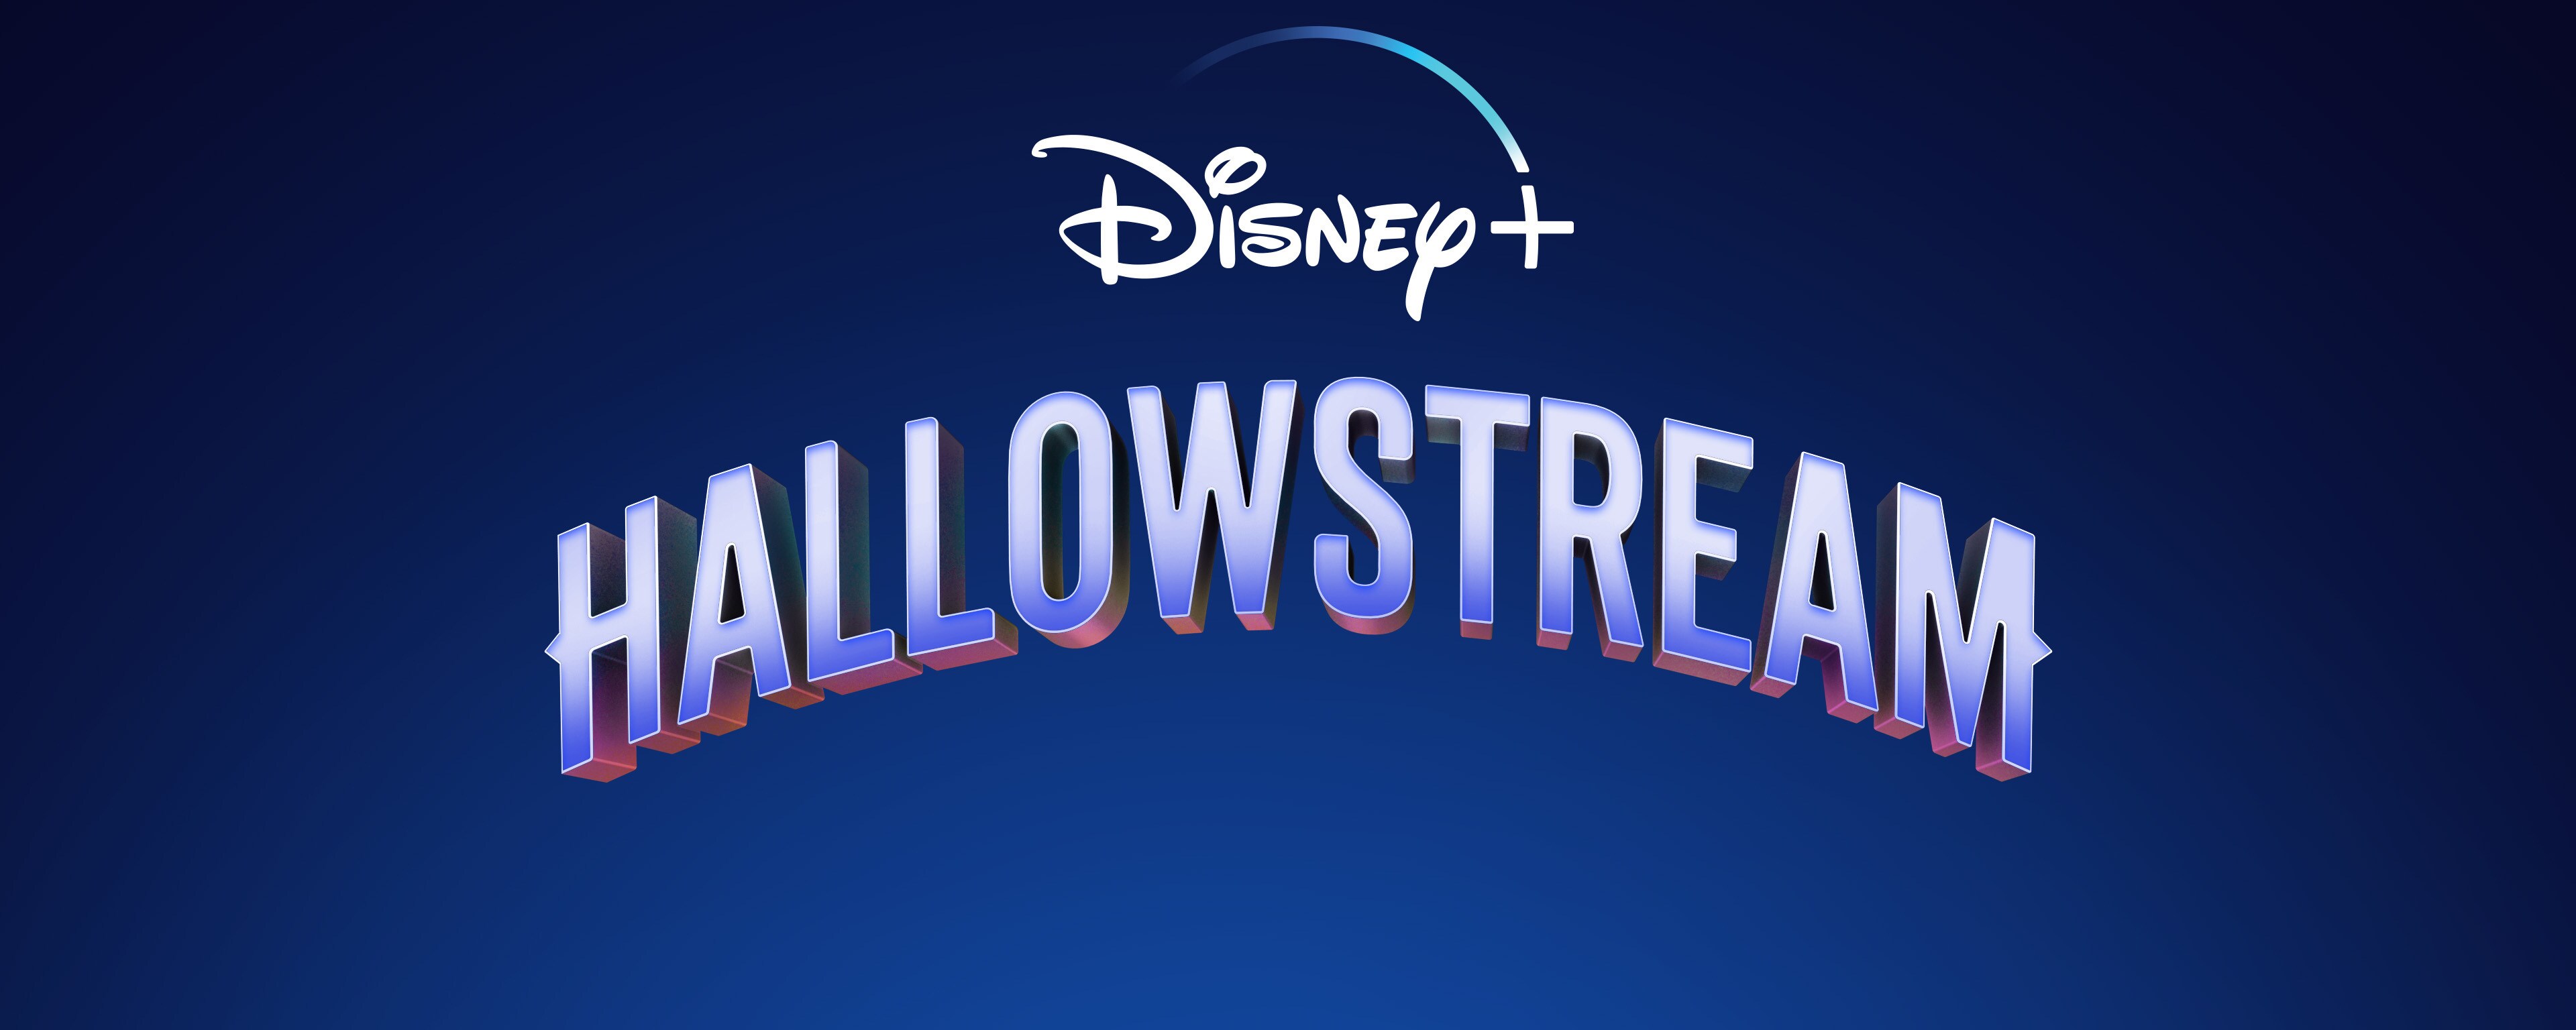 Disney+ Runs Amok With Second Annual Hallowstream Celebration Full Of